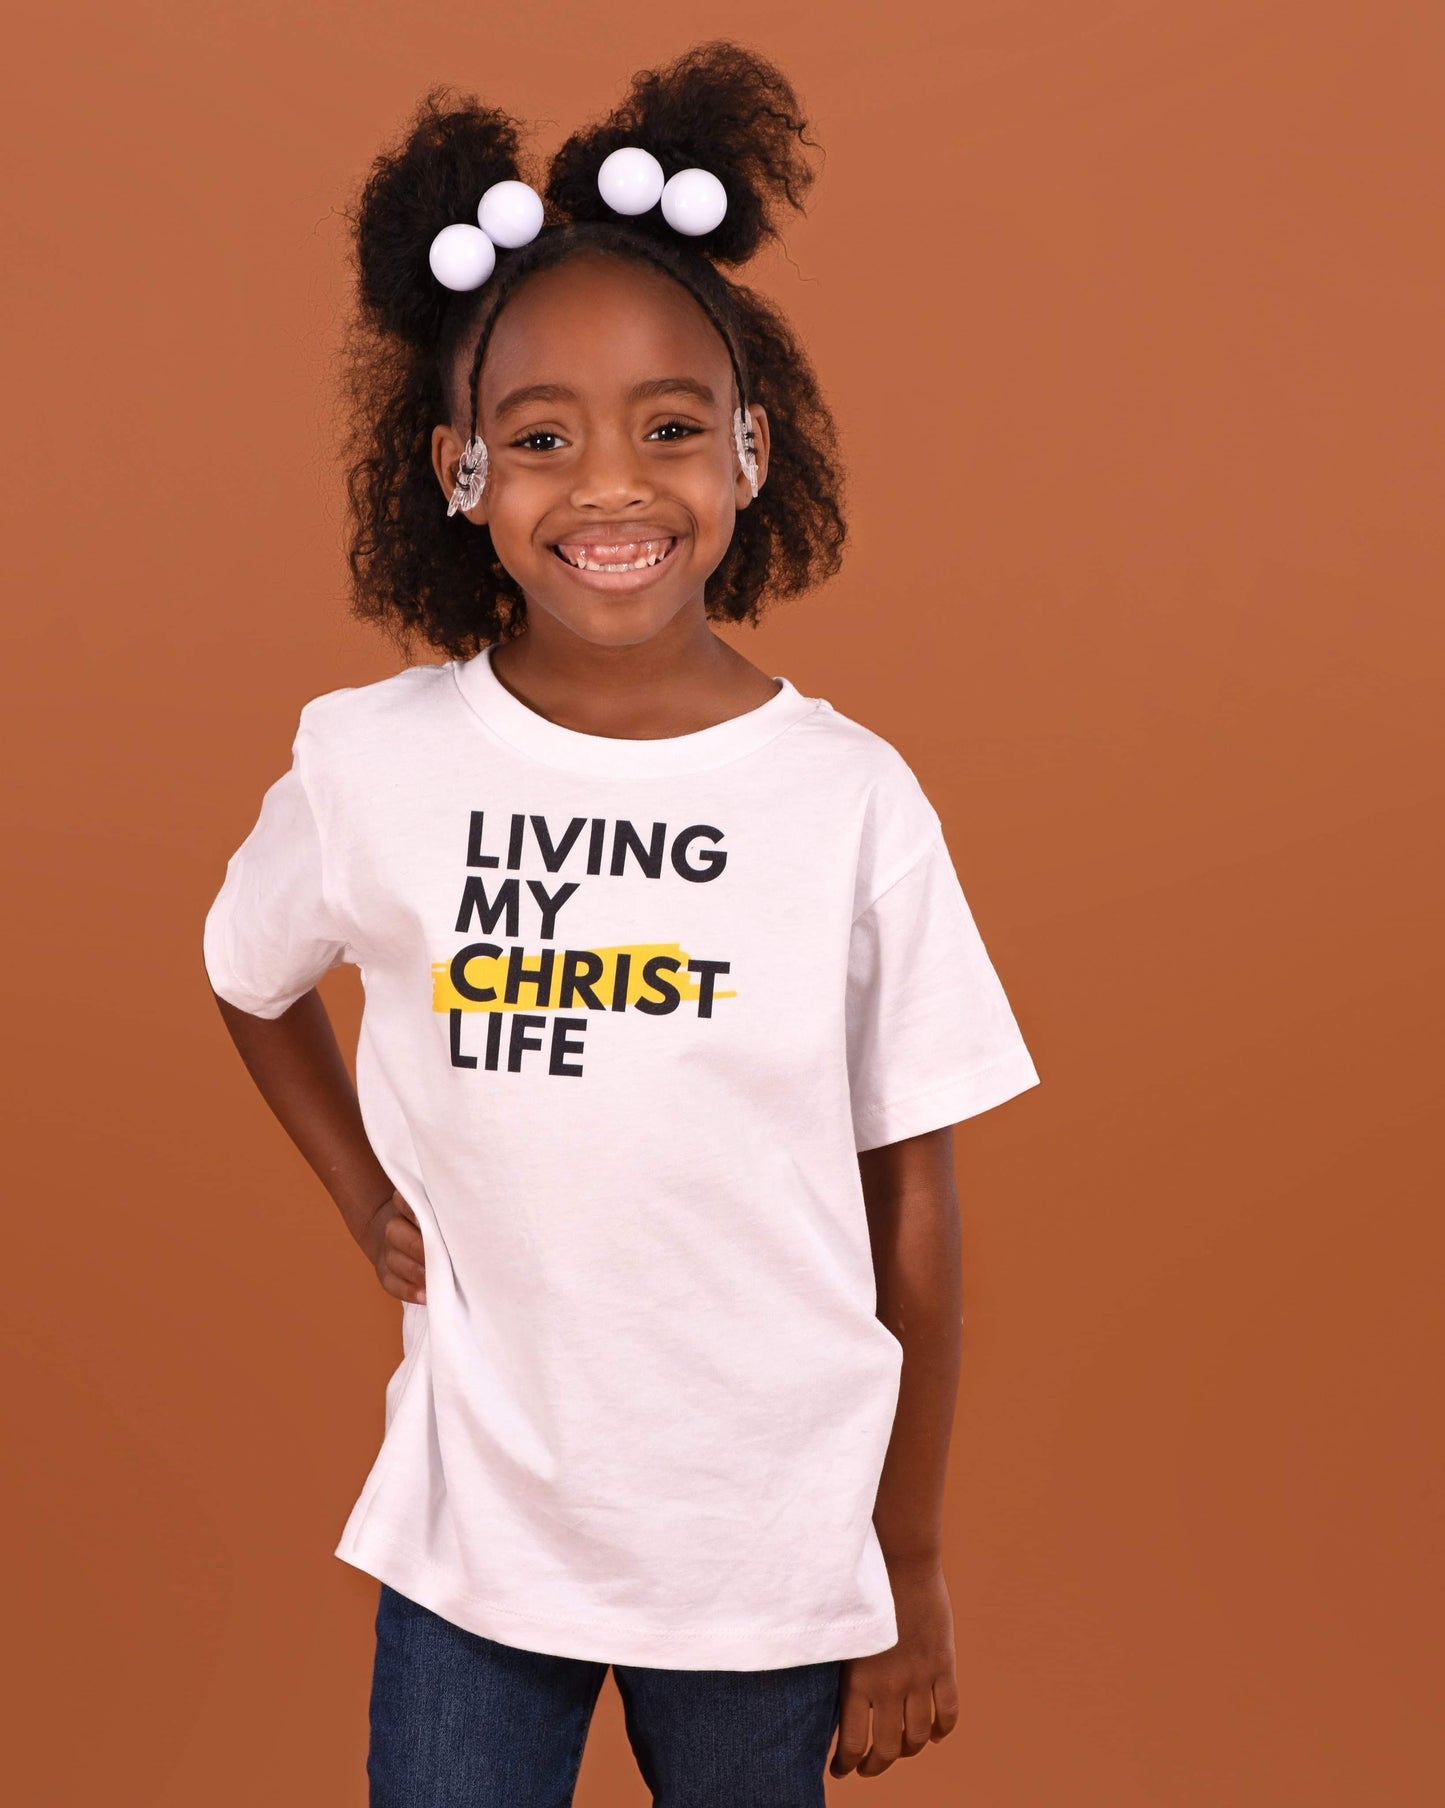 Toddler Christ Life shirt